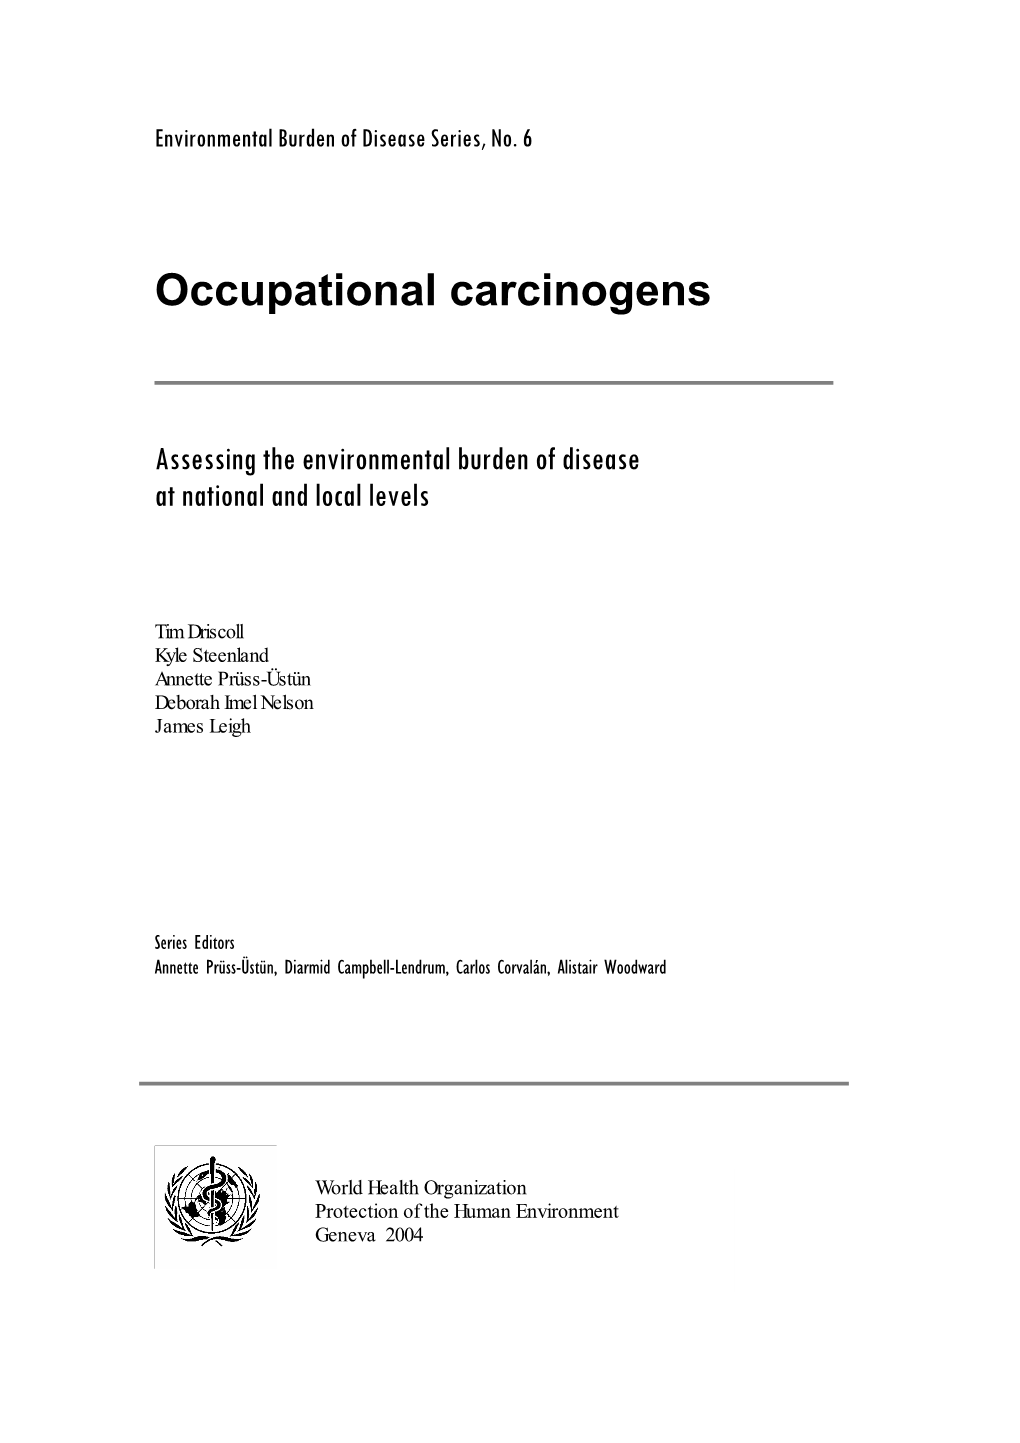 Occupational Carcinogens